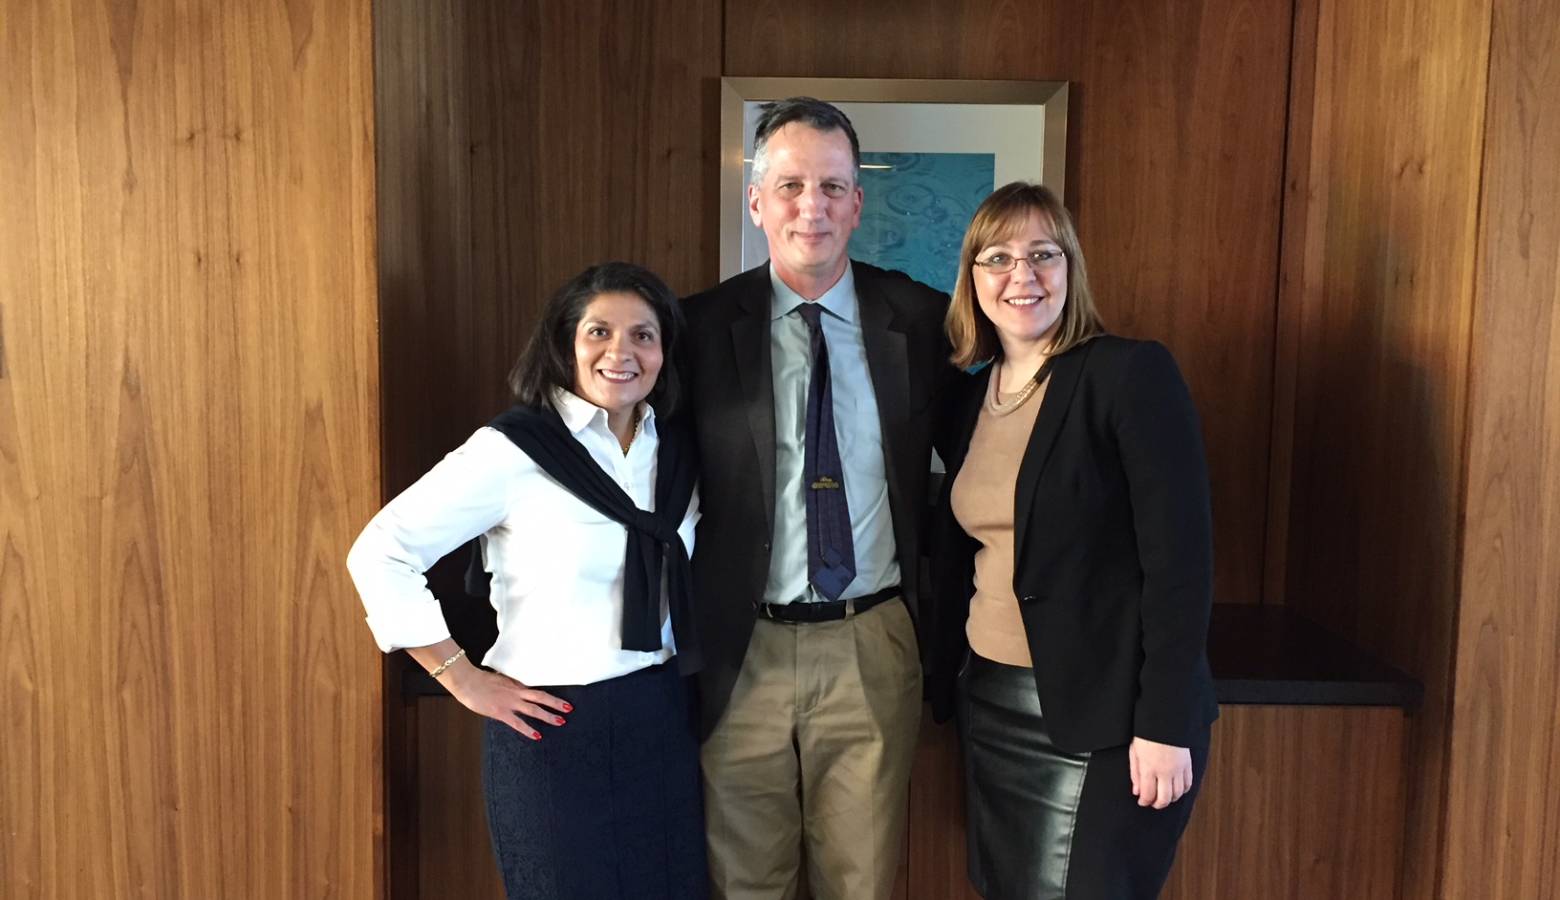 Dr. Maria Carrillo, Dr. Bruce Lamb and Dr. Liana Apostolova investigators with the LEADS trial. (Jill Sheridan/IPB News)